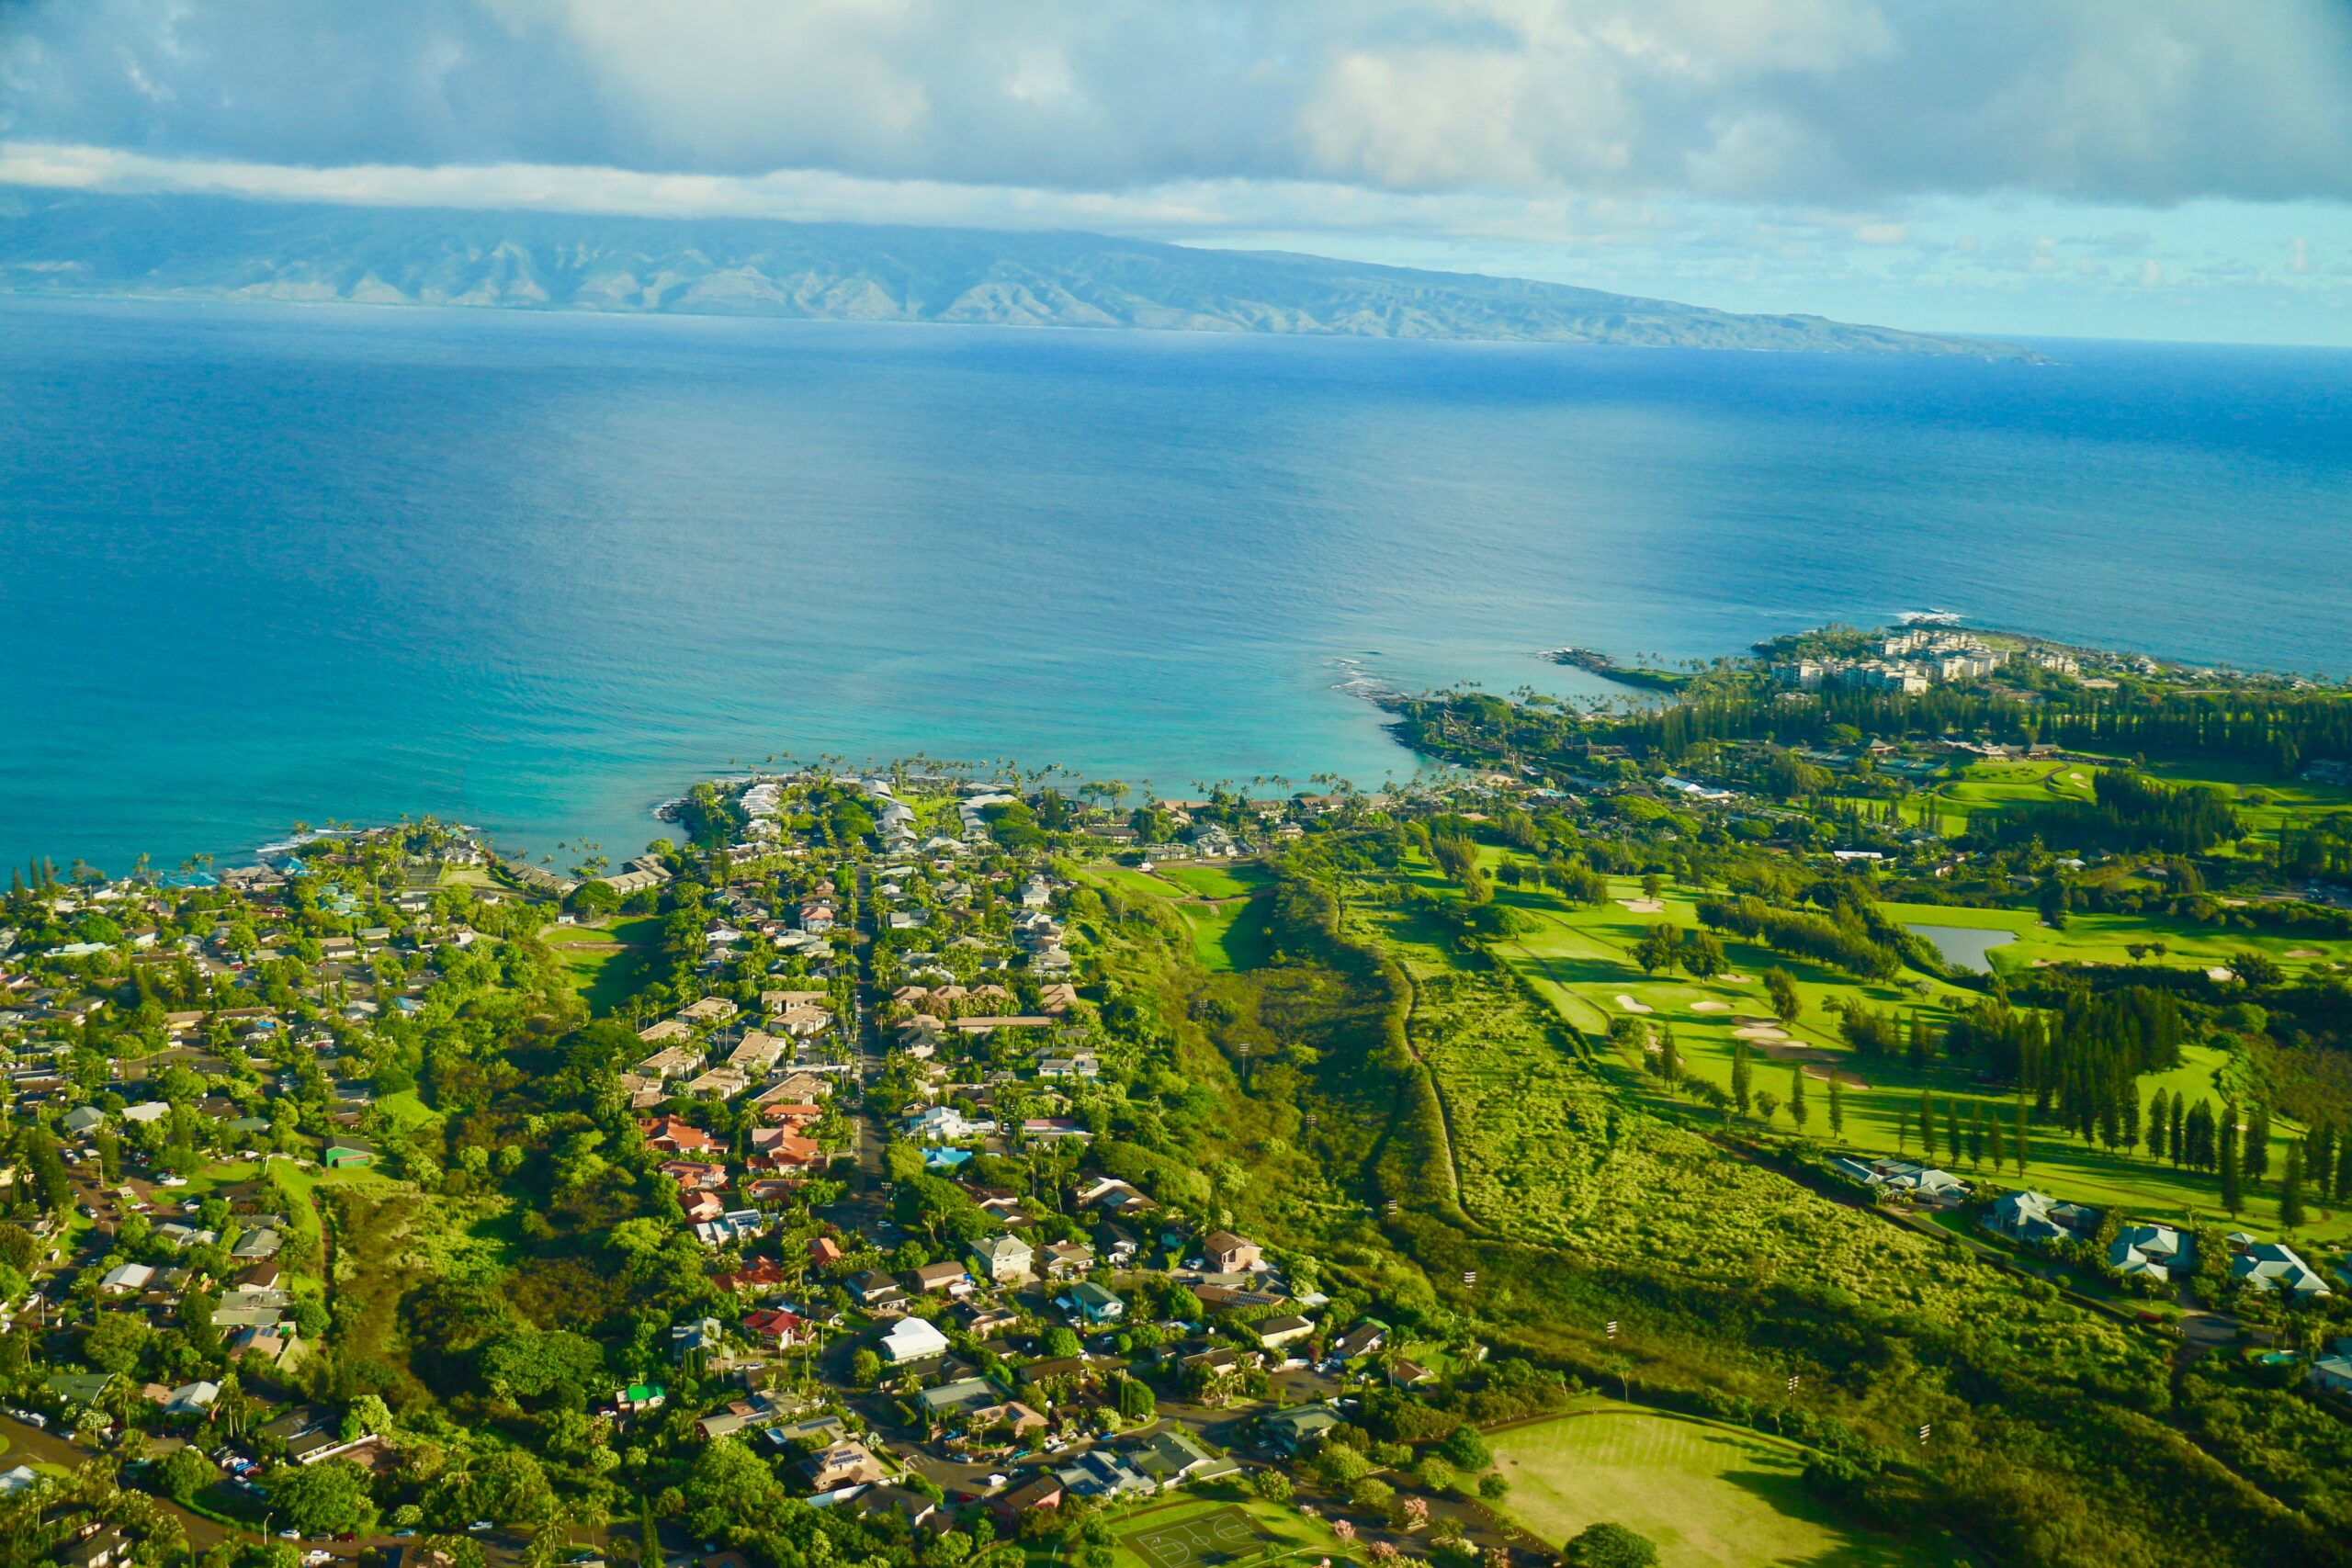 Overhead shot of Maui's landscape, including land and ocean.